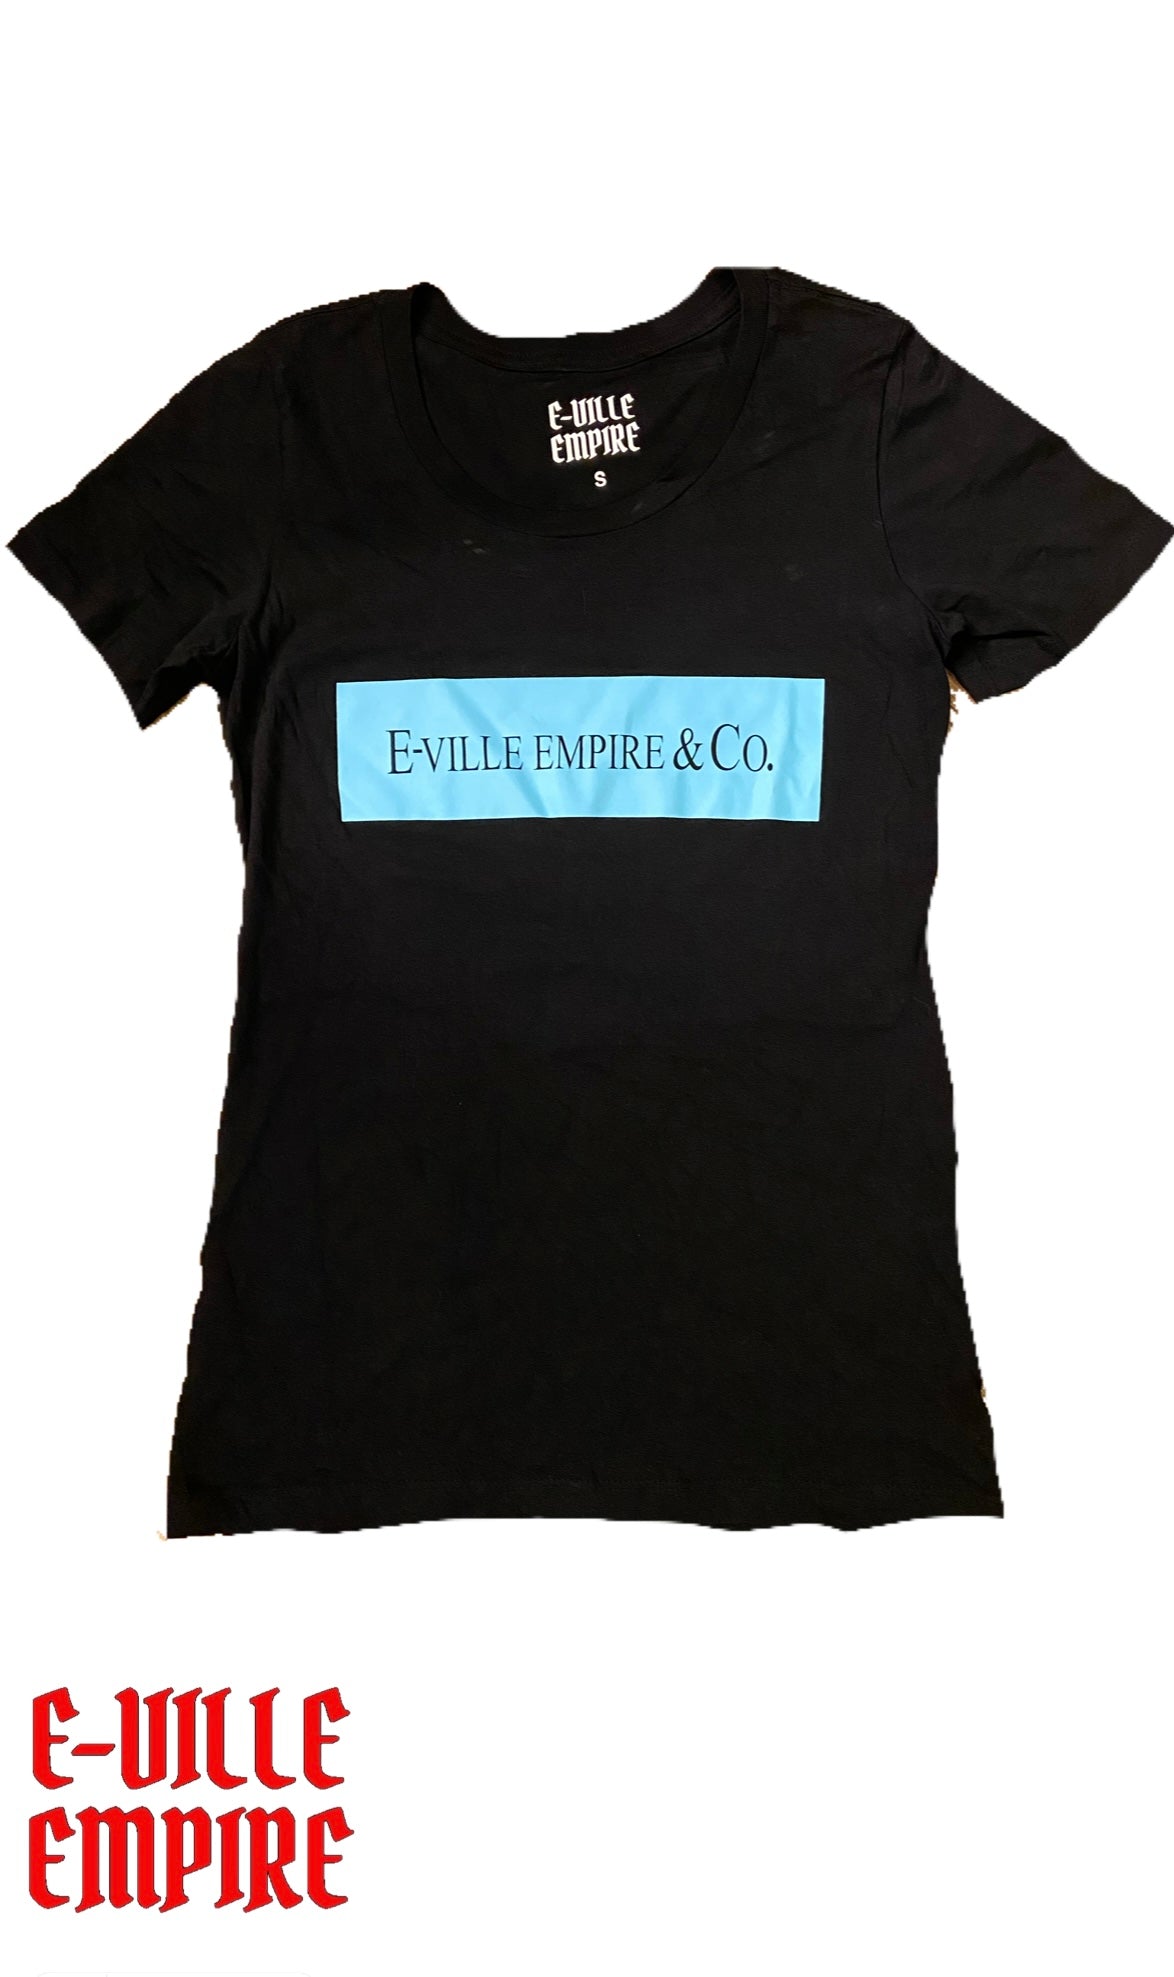 E-Ville Empire & Co. T-Shirt - Black